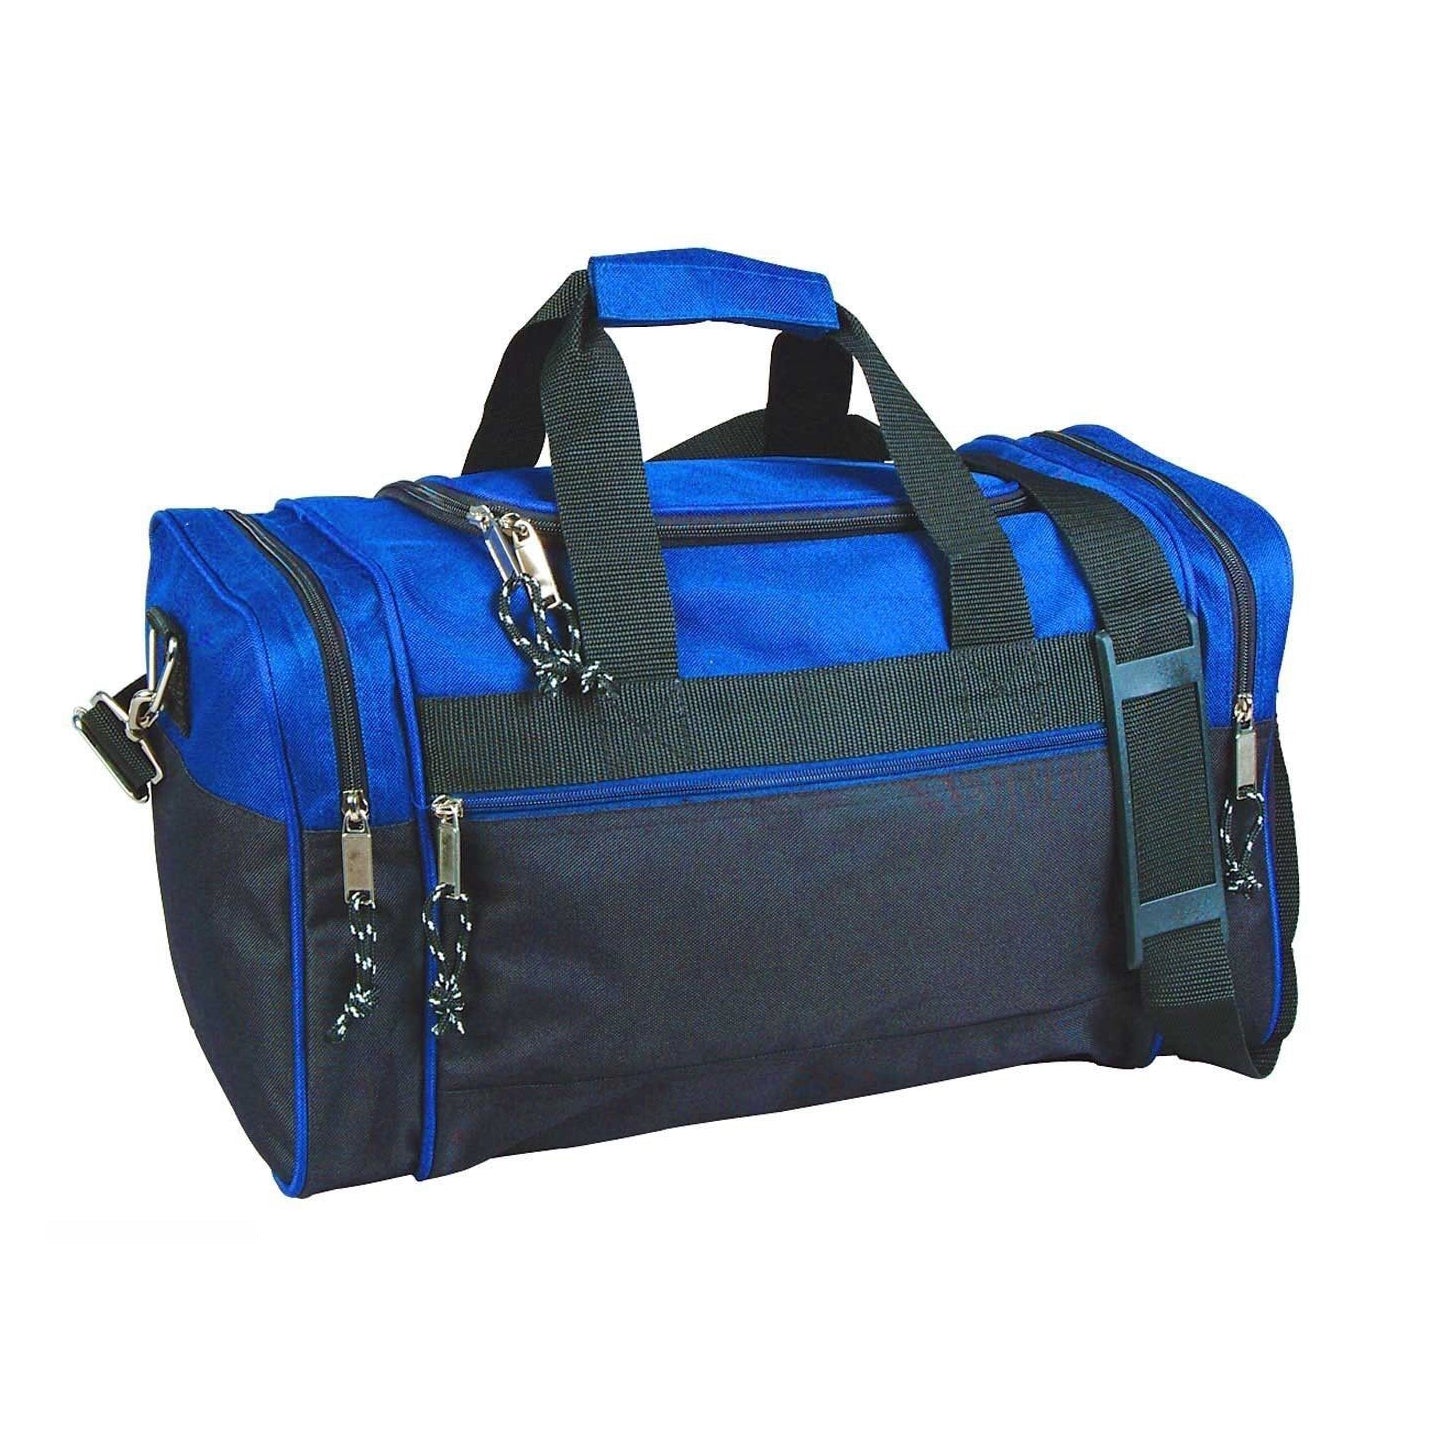 DDB72 Digital Camo. Duffle Bag, Travel Bag, Gym Bag